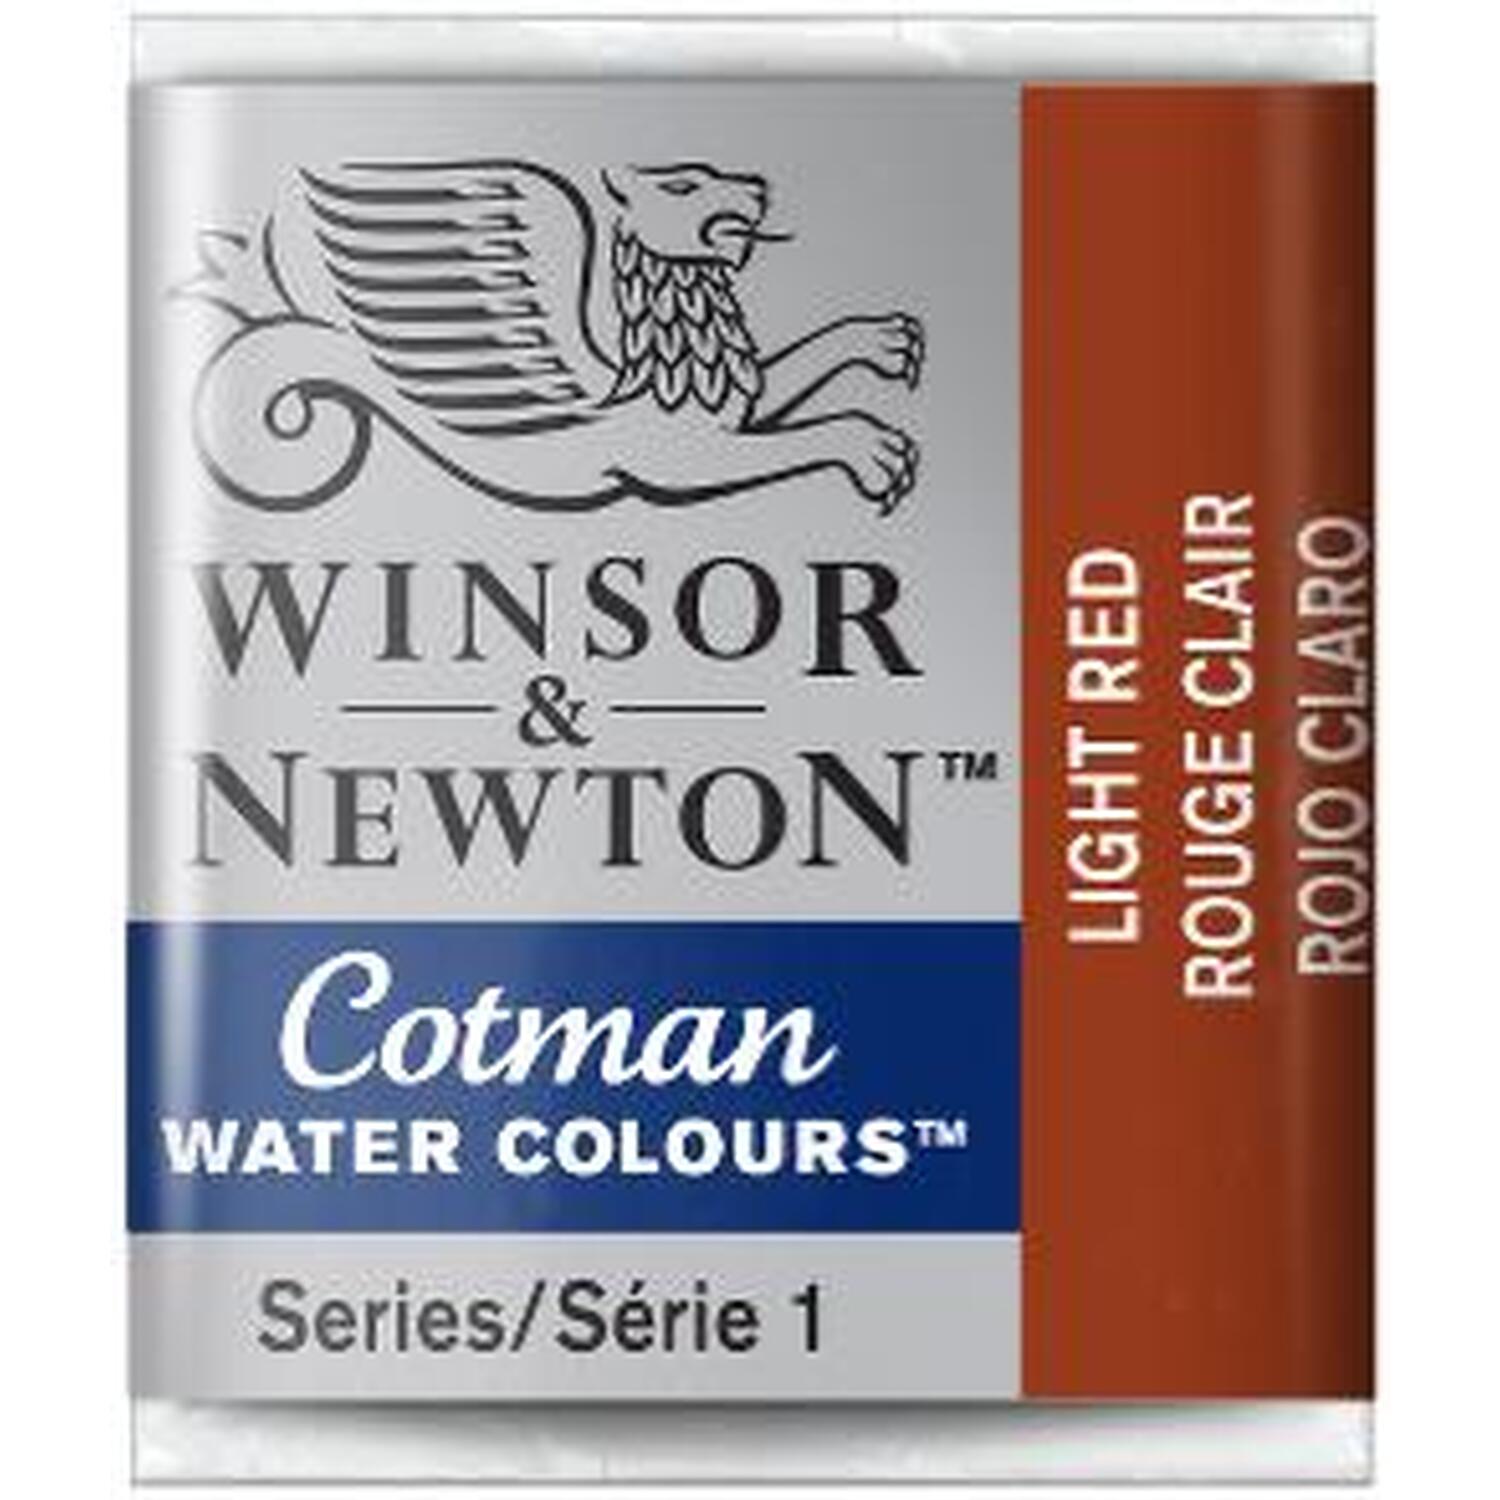 Winsor and Newton Cotman Watercolour Half Pan Paint - Light Red Image